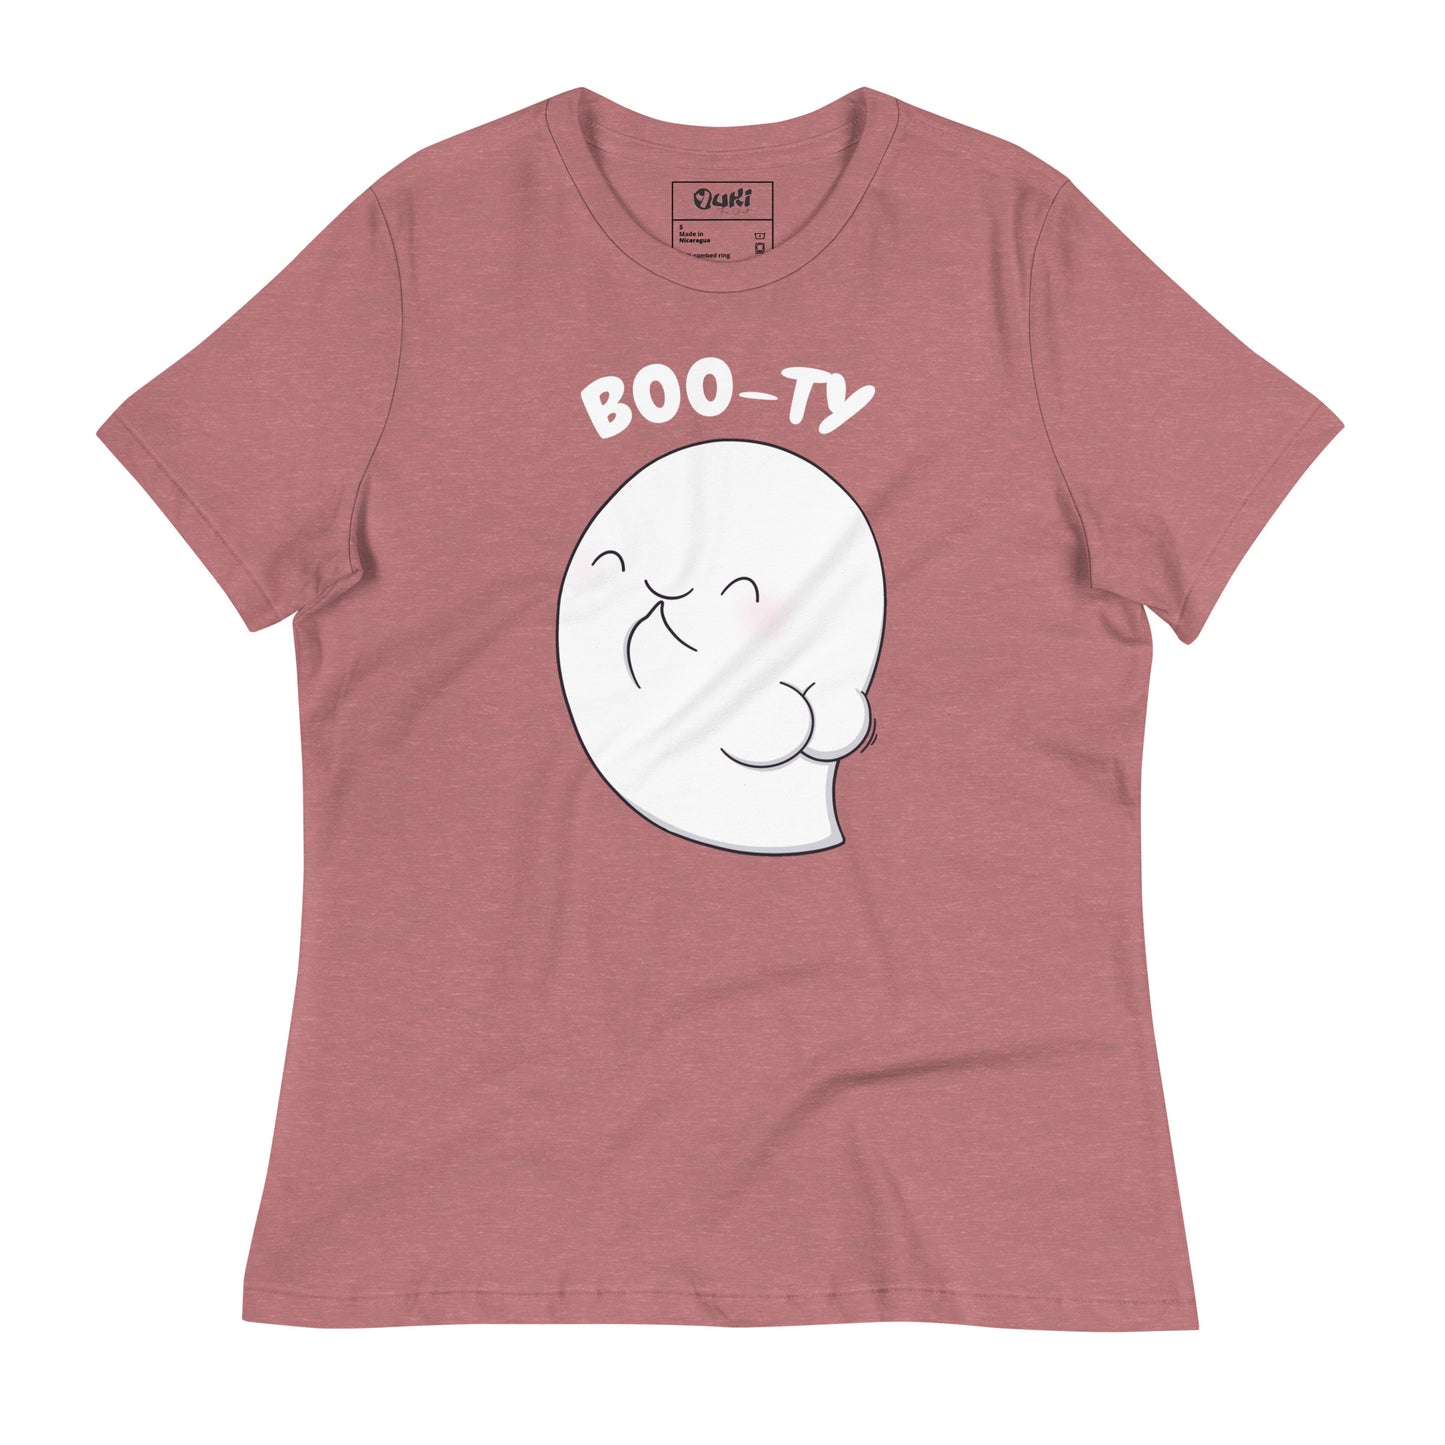 Boo-ty - Women's Relaxed T-Shirt